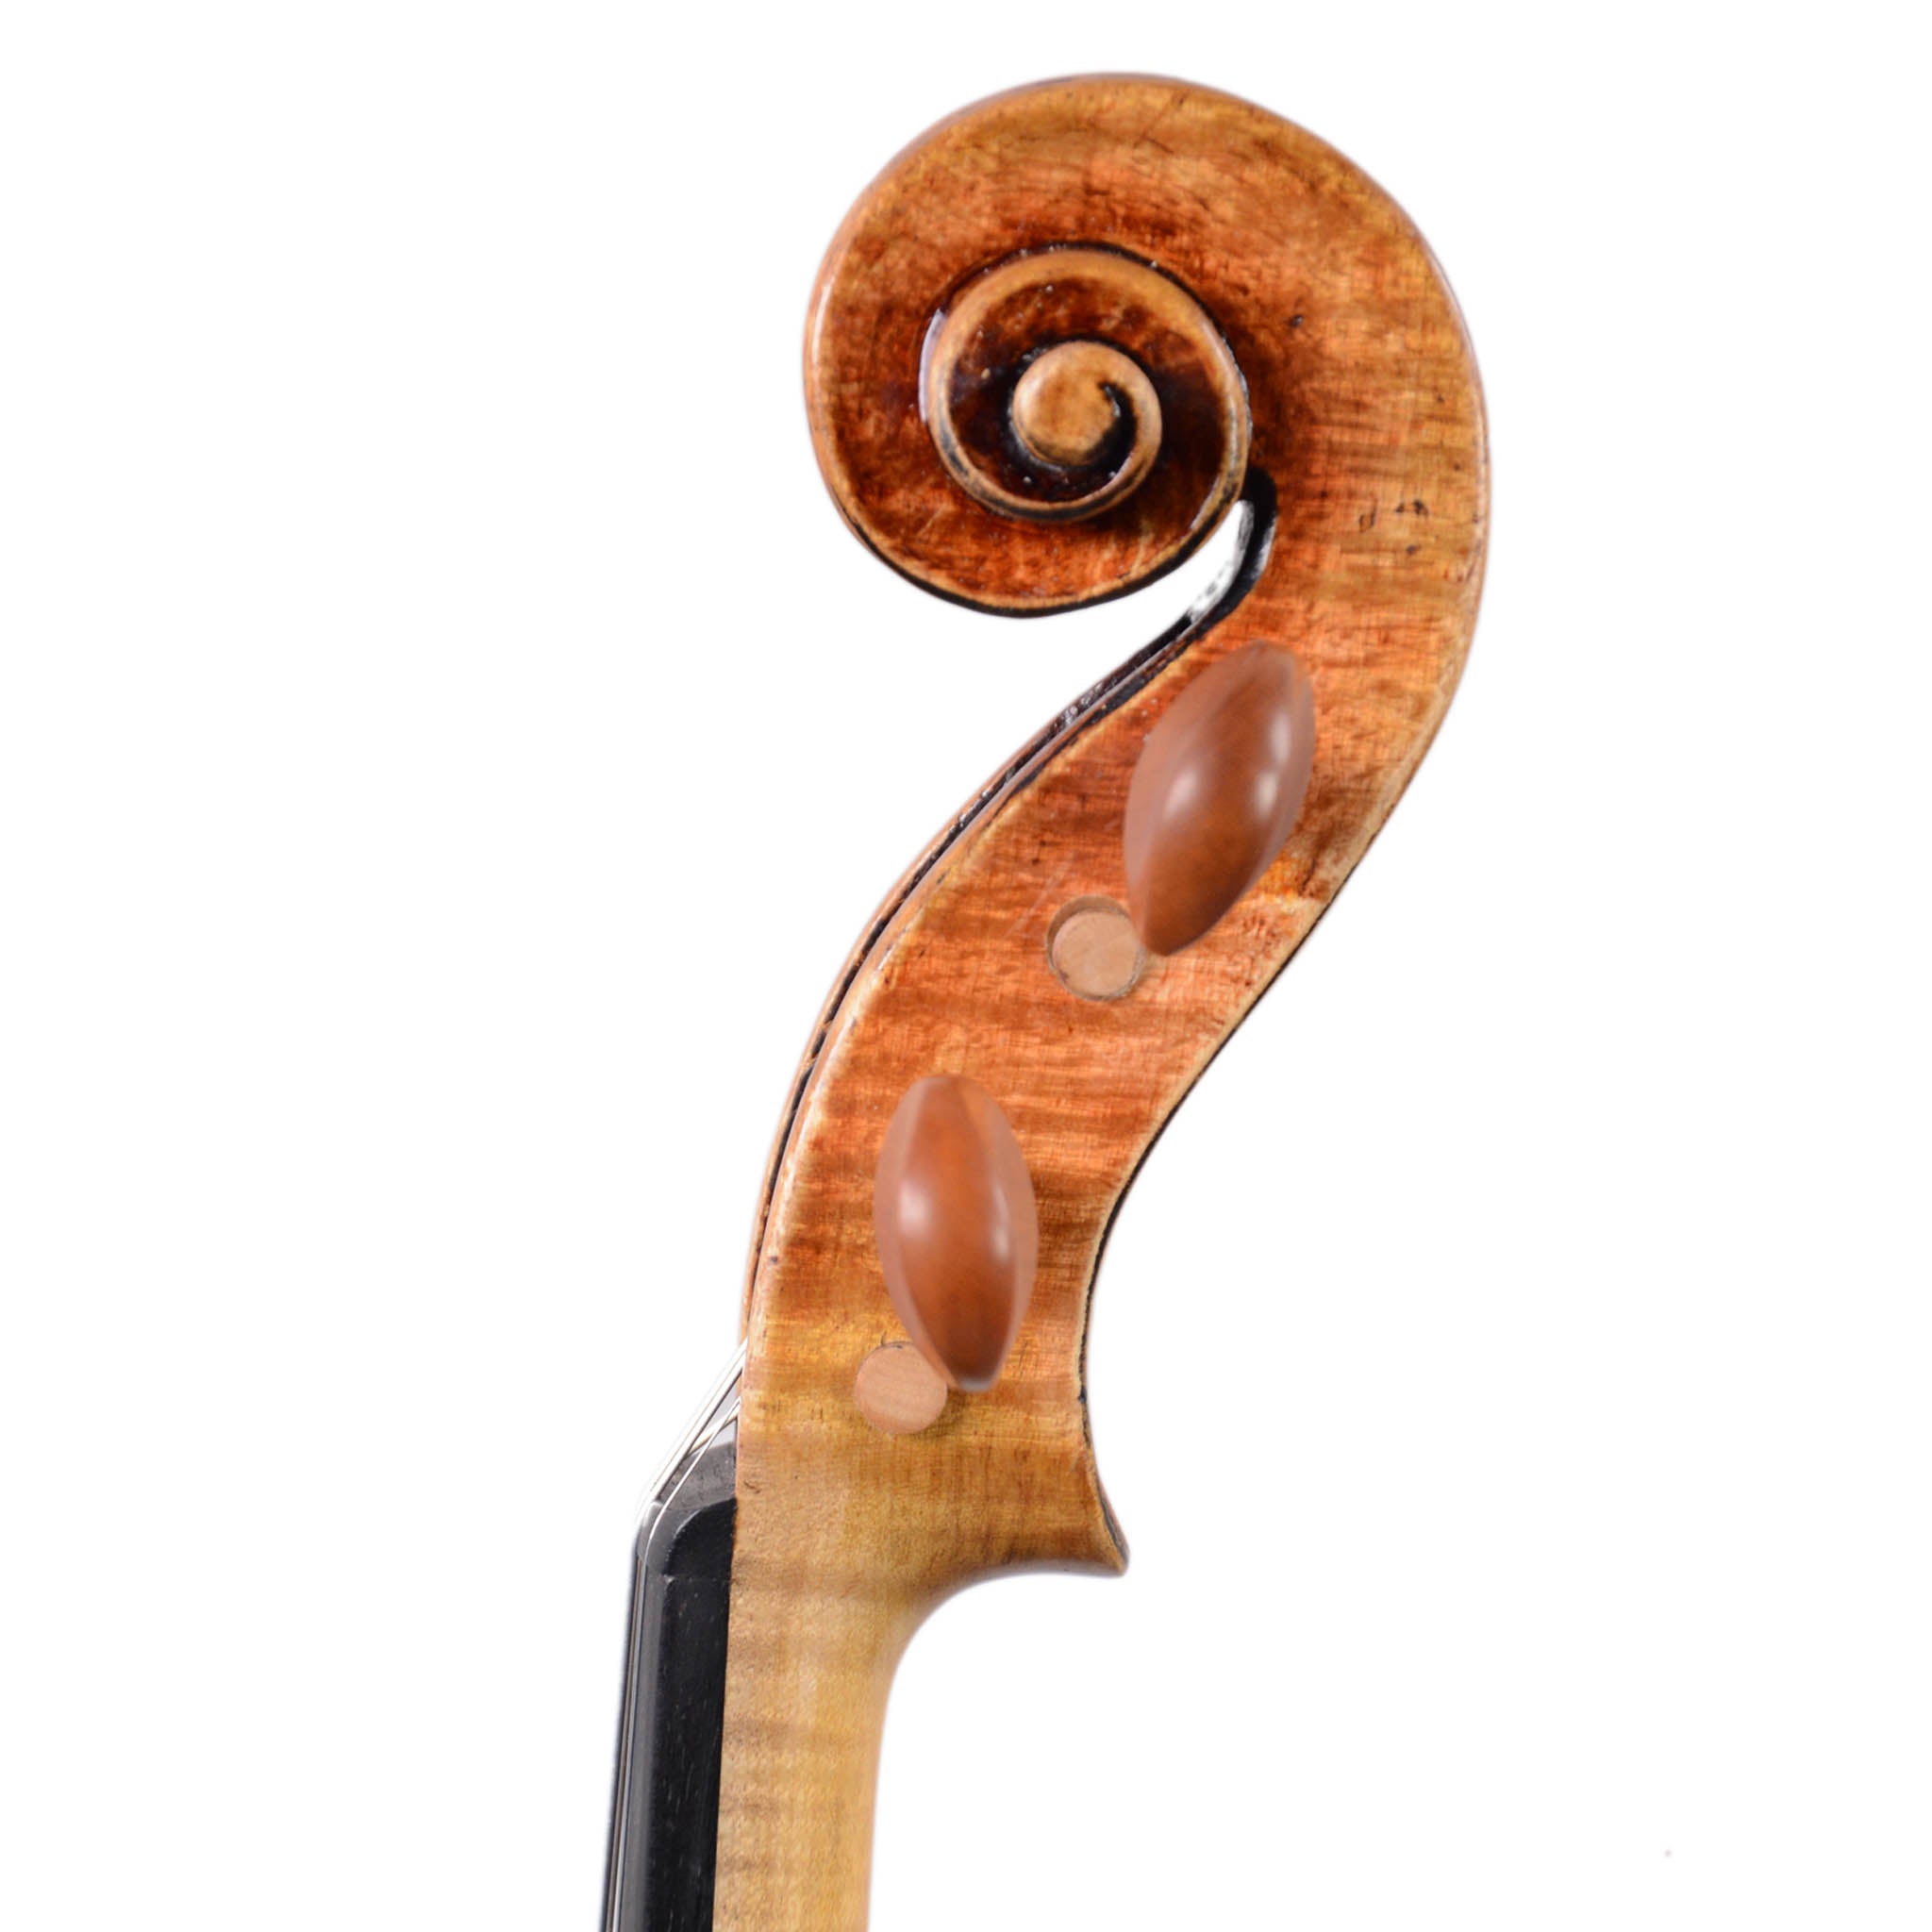 Francesco Pierotti 4/4 Fine Italian Violin 2019